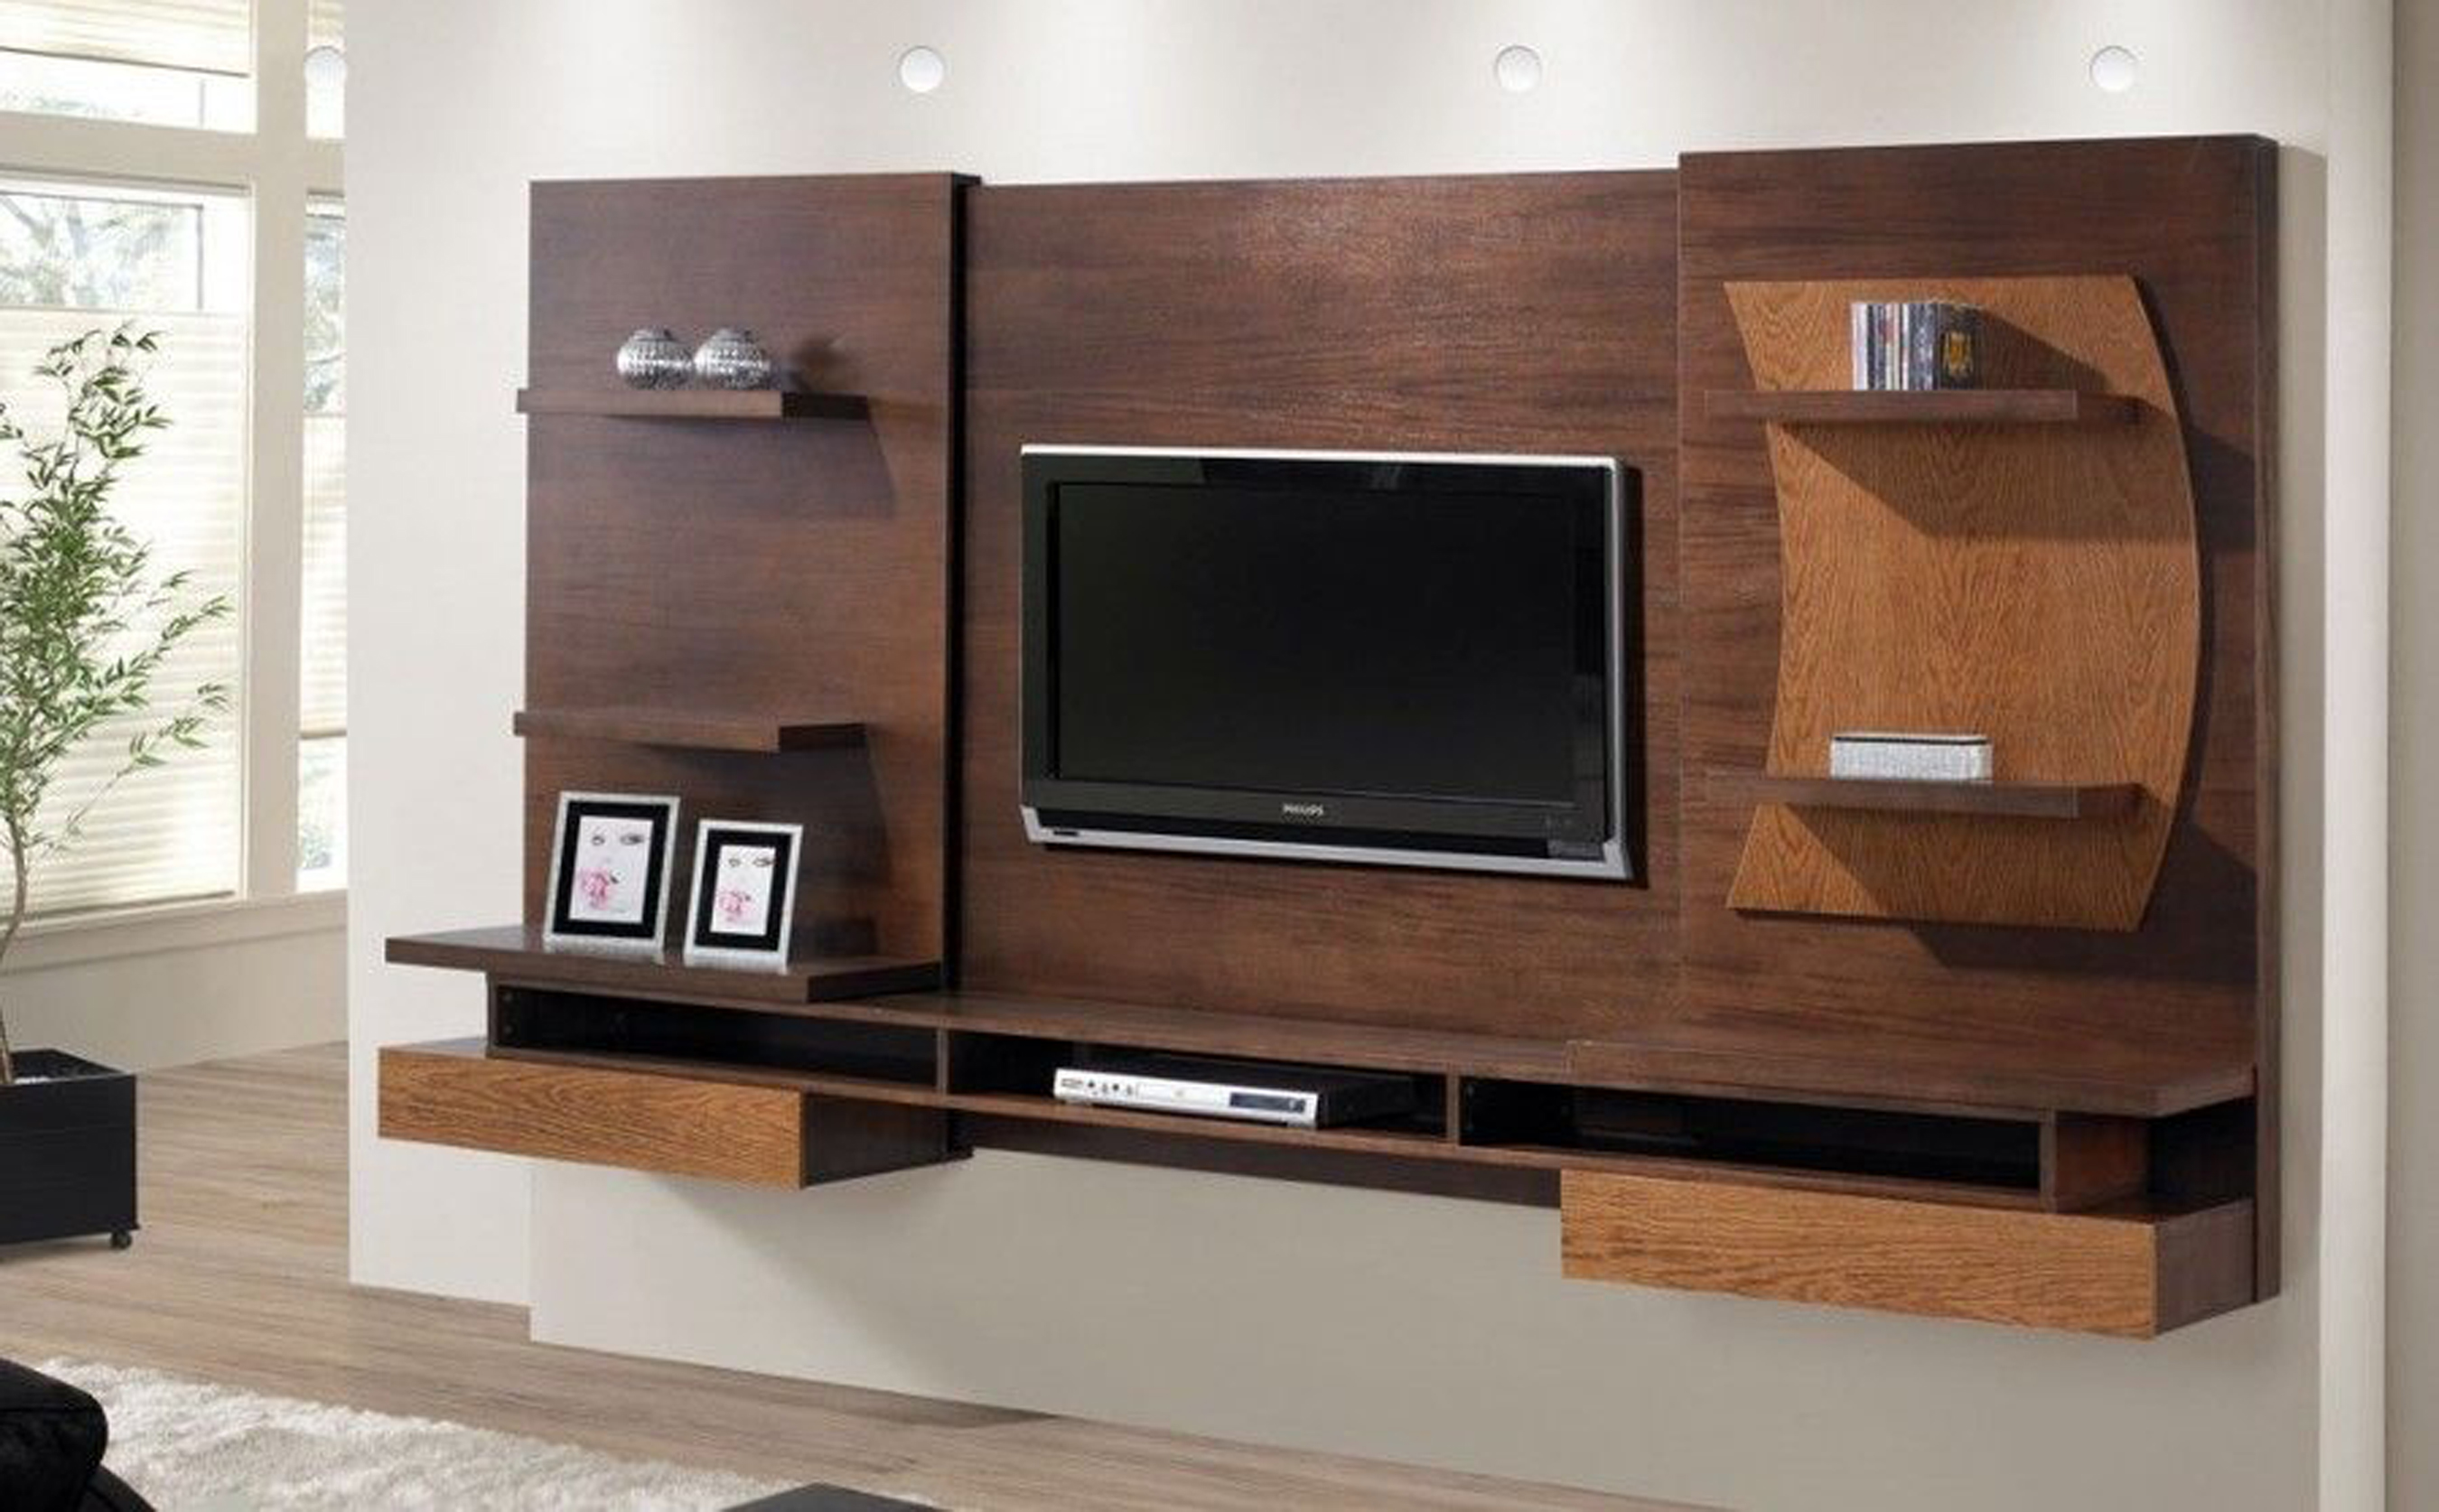 A floating console - modern tv unit design ideas tv cabinet design modern simple tv wall design electronic city bangalore